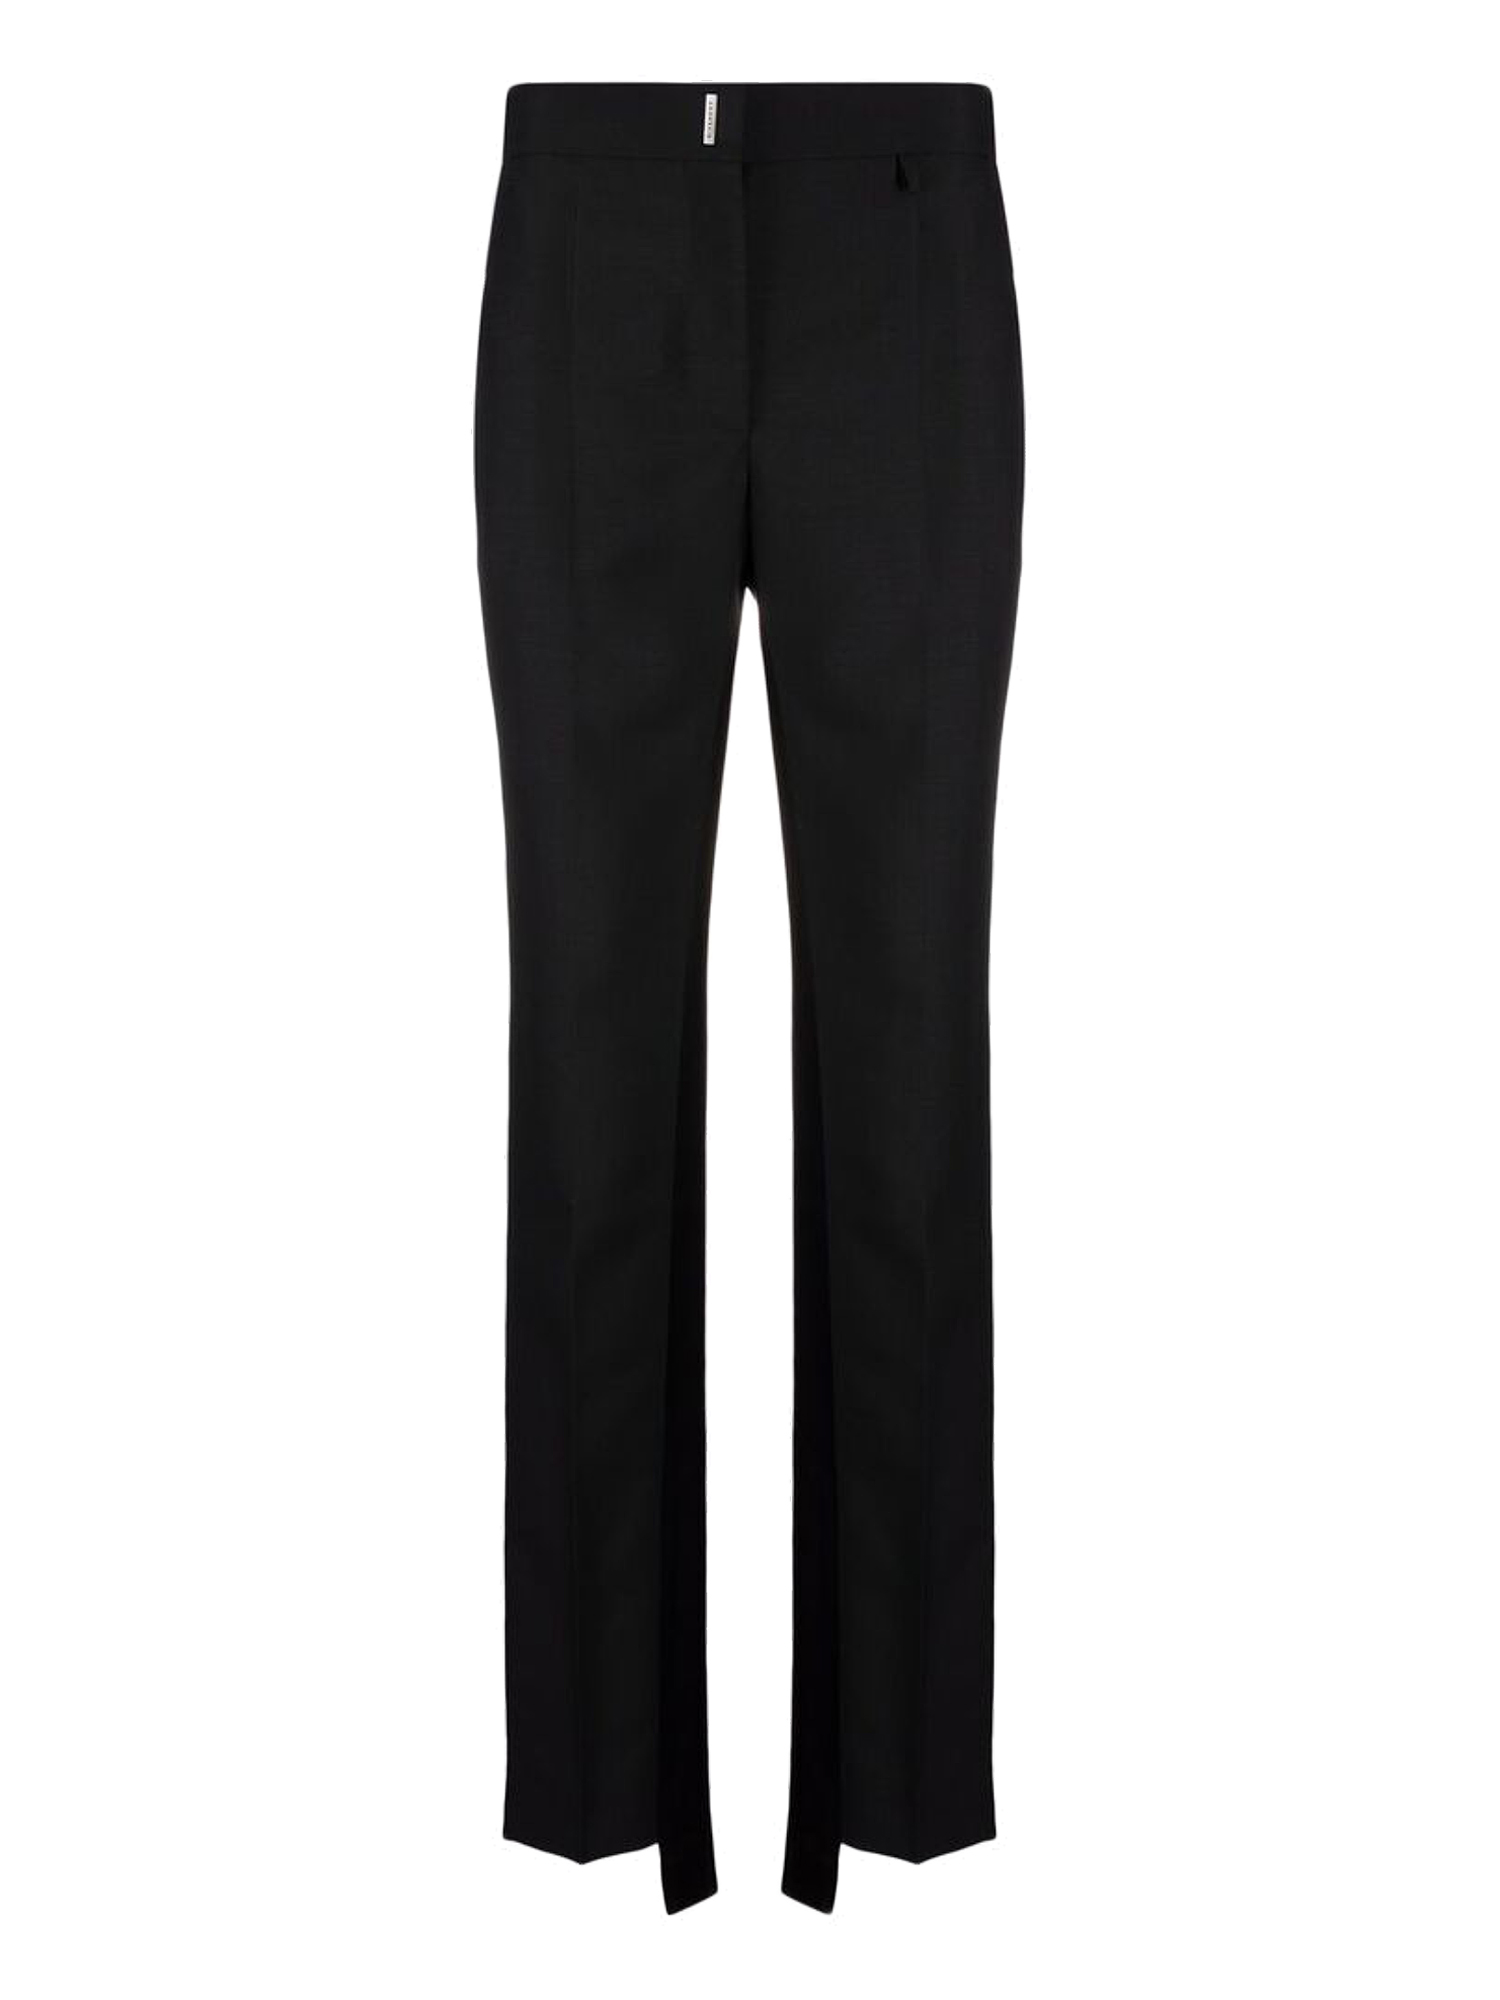 Pantalons Pour Femme - Givenchy - En Wool Black - Taille:  -